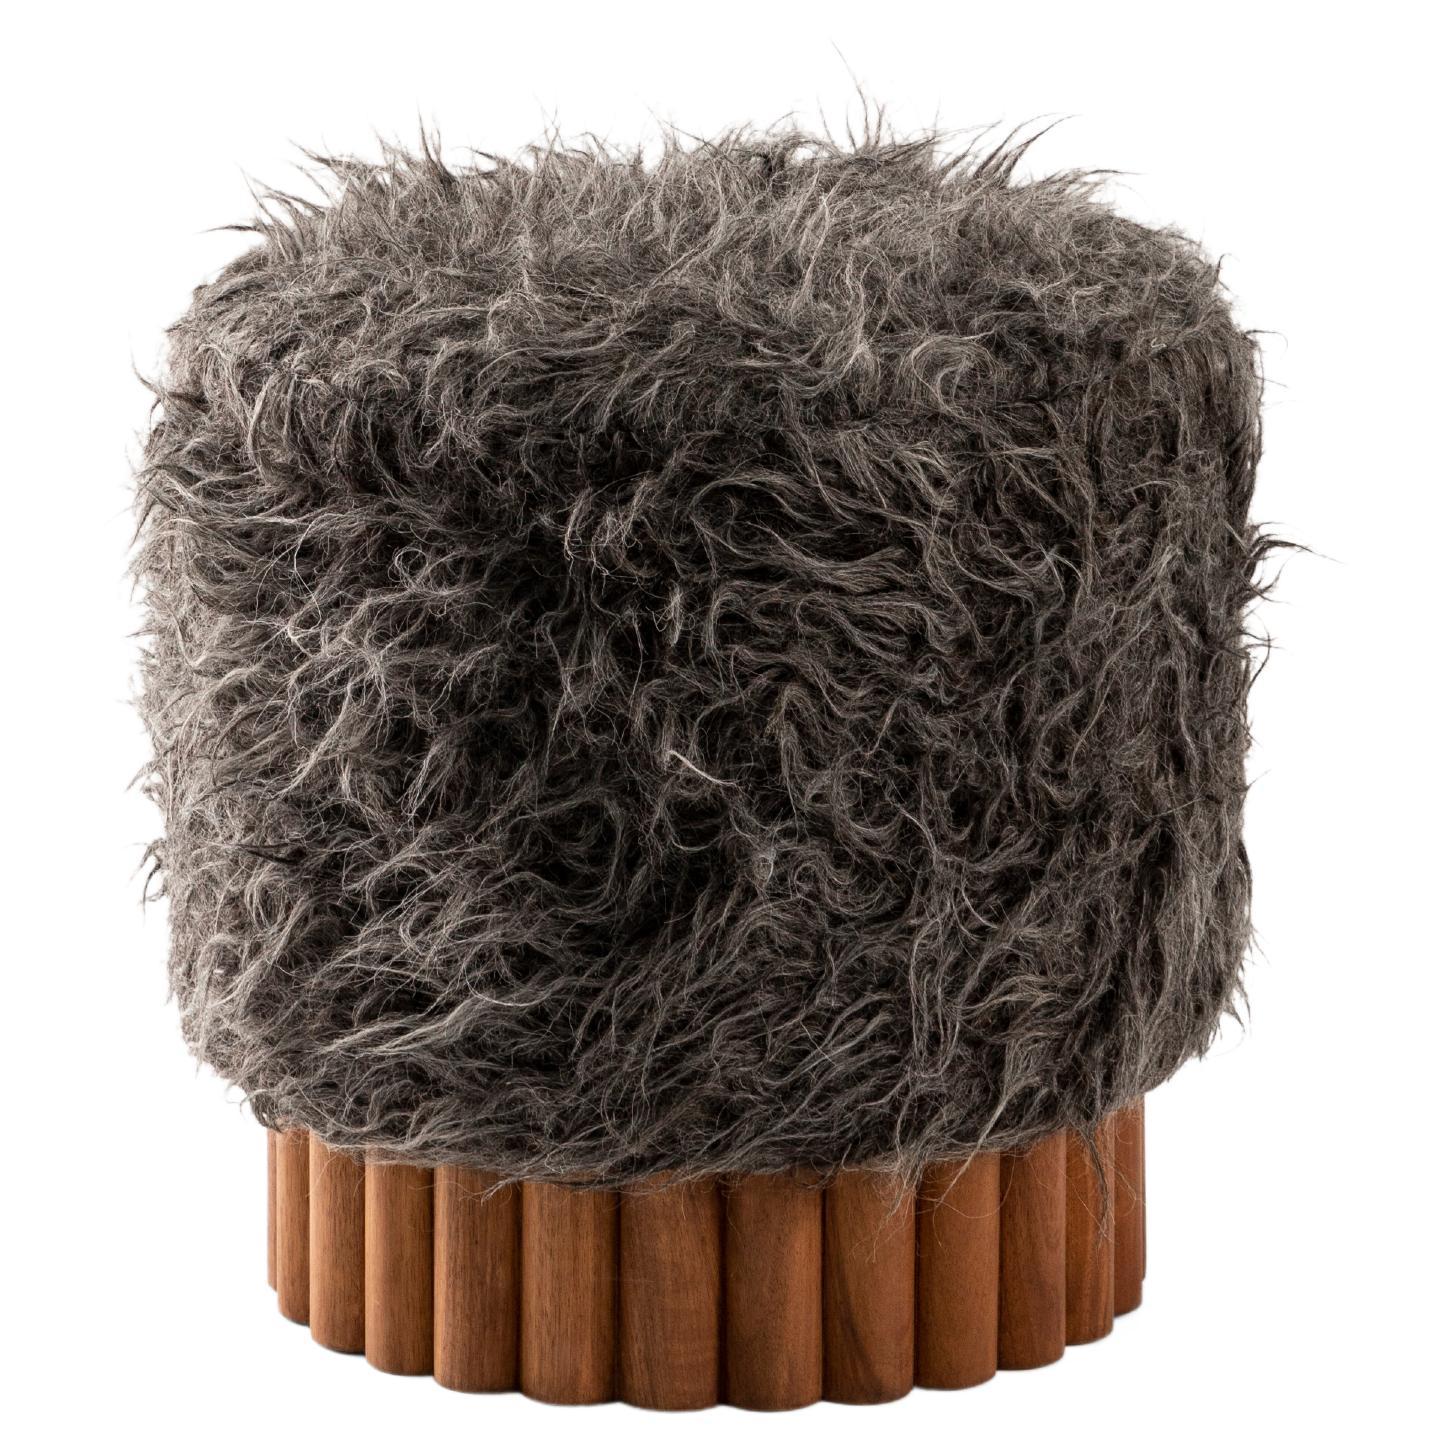 LOTO Pouf in Gray Long Pile Shag Wool by Peca For Sale